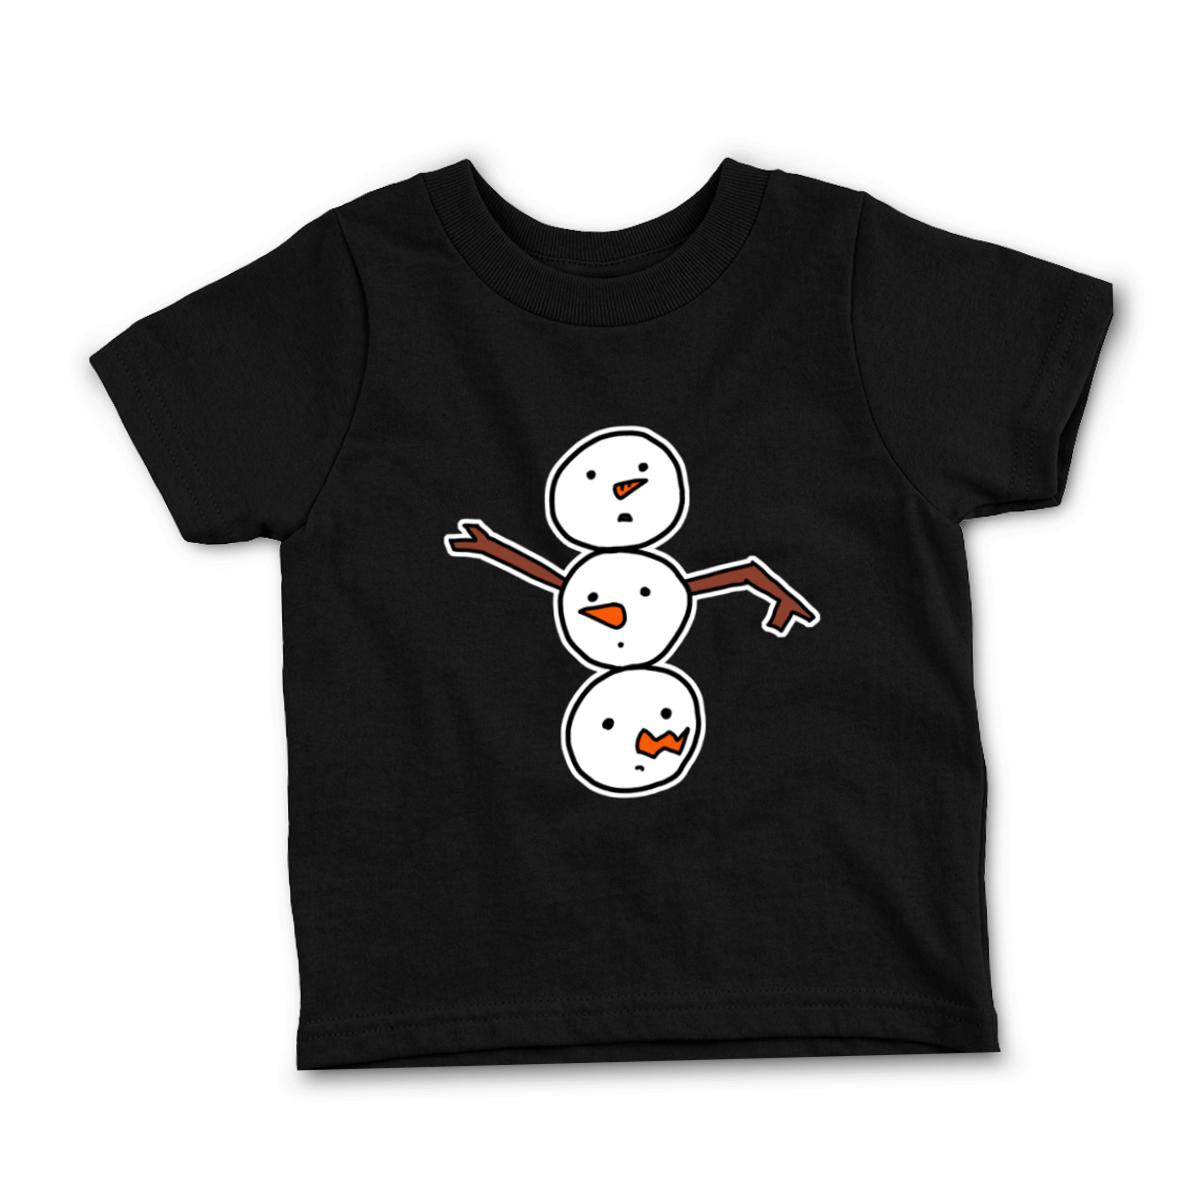 Snowman All Heads Toddler Tee 2T black